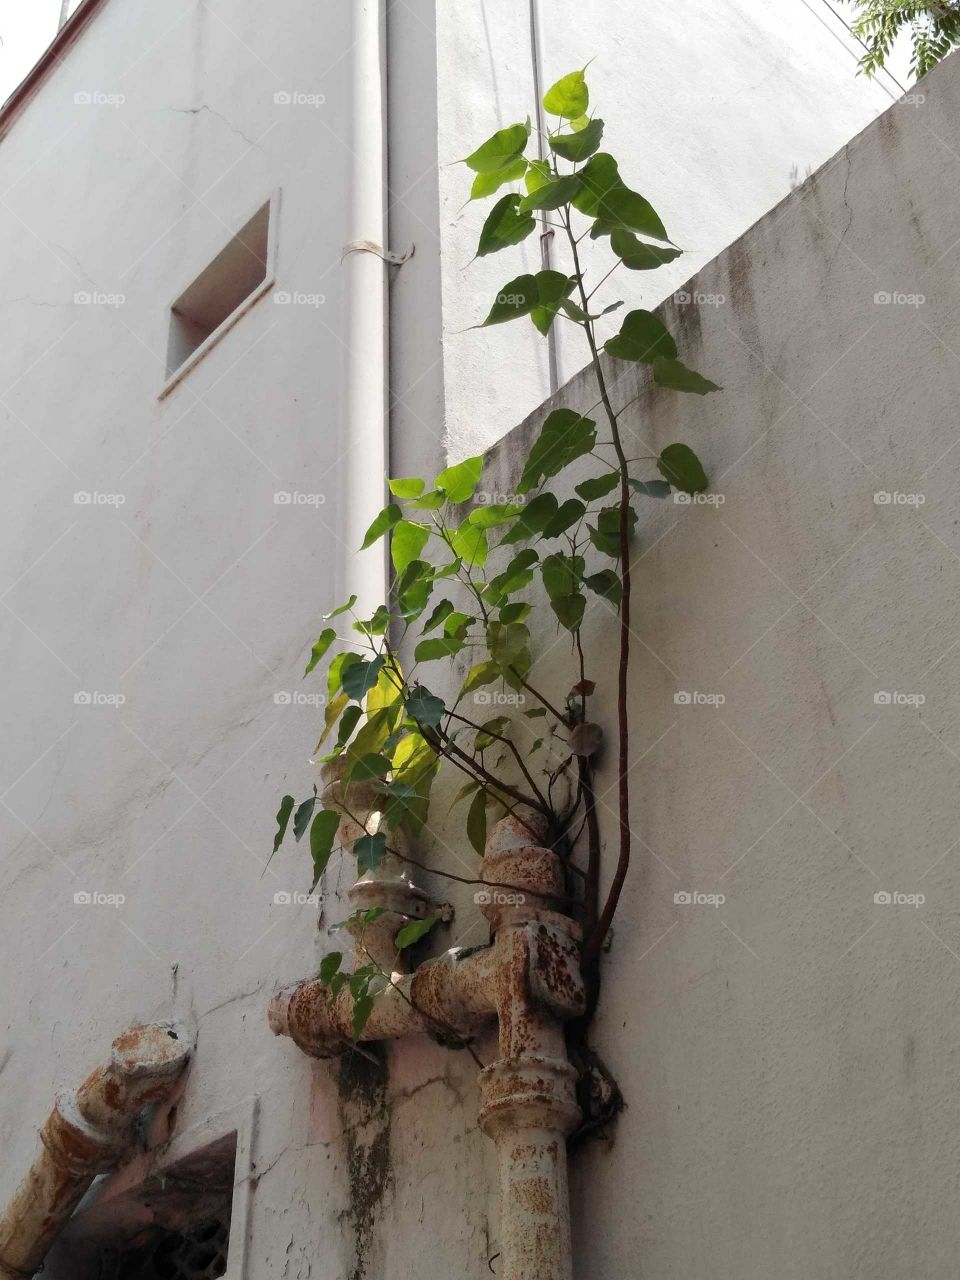 peepal tree growing on the wall